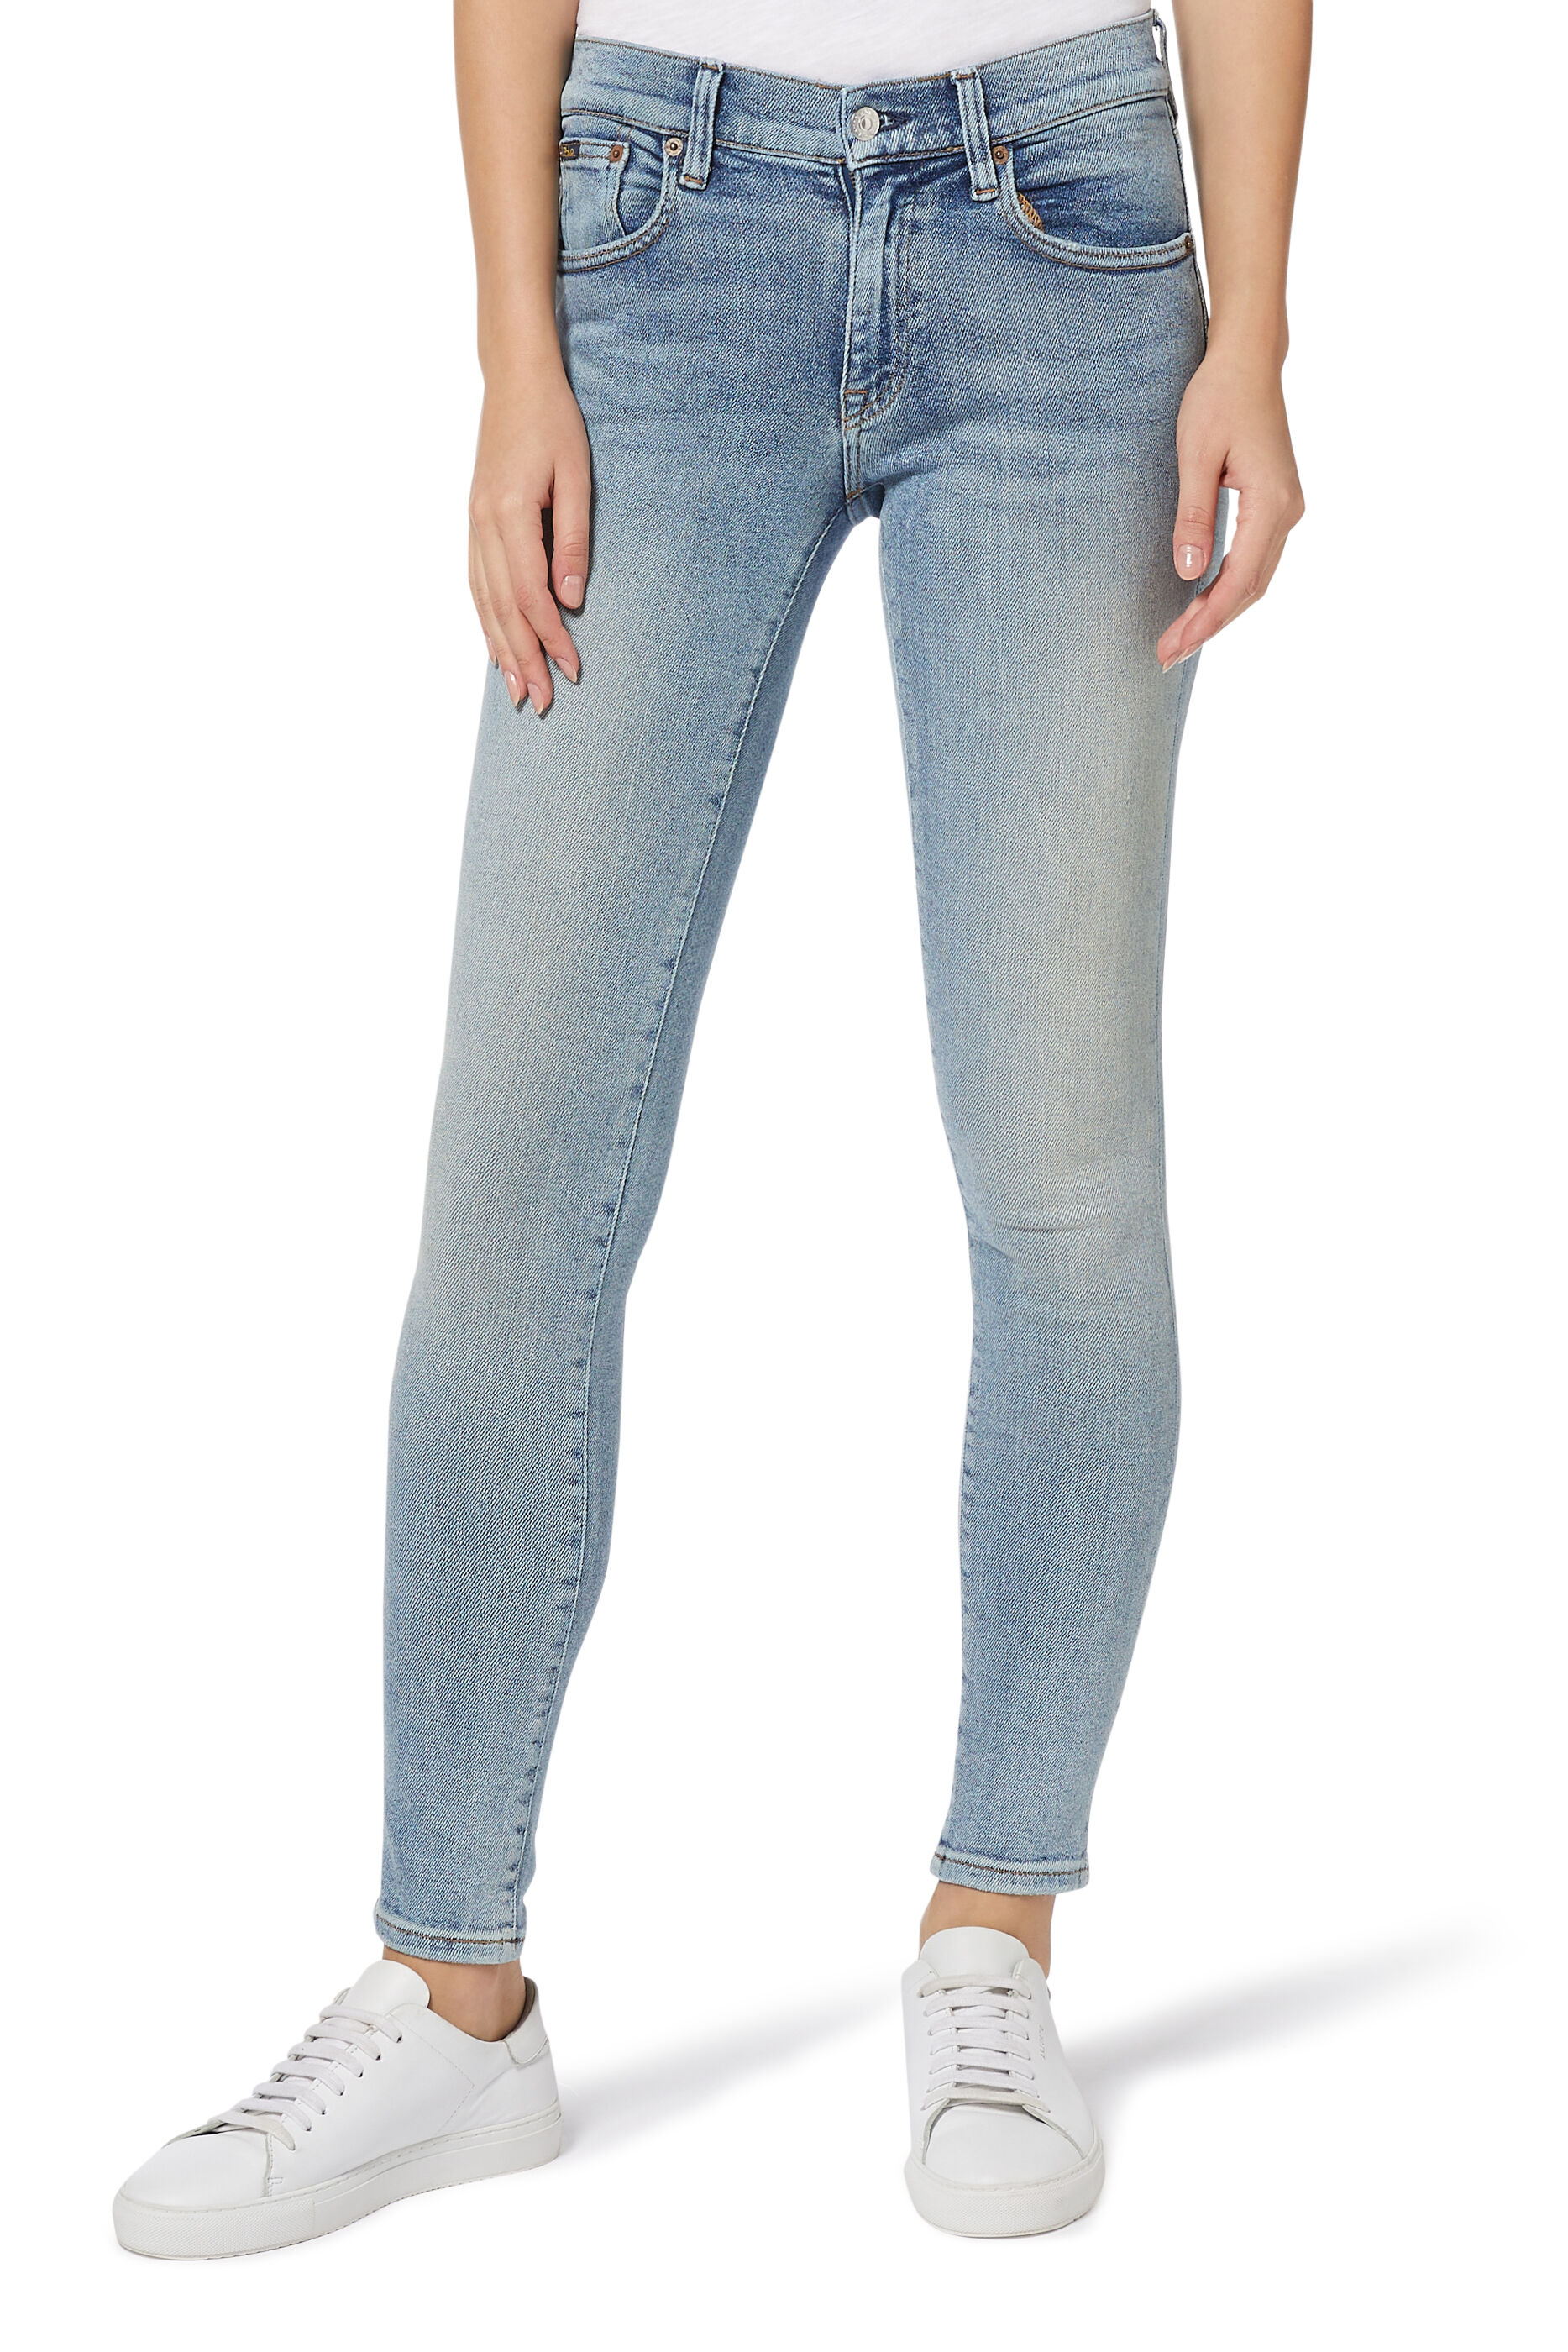 ralph lauren womens jeans sale